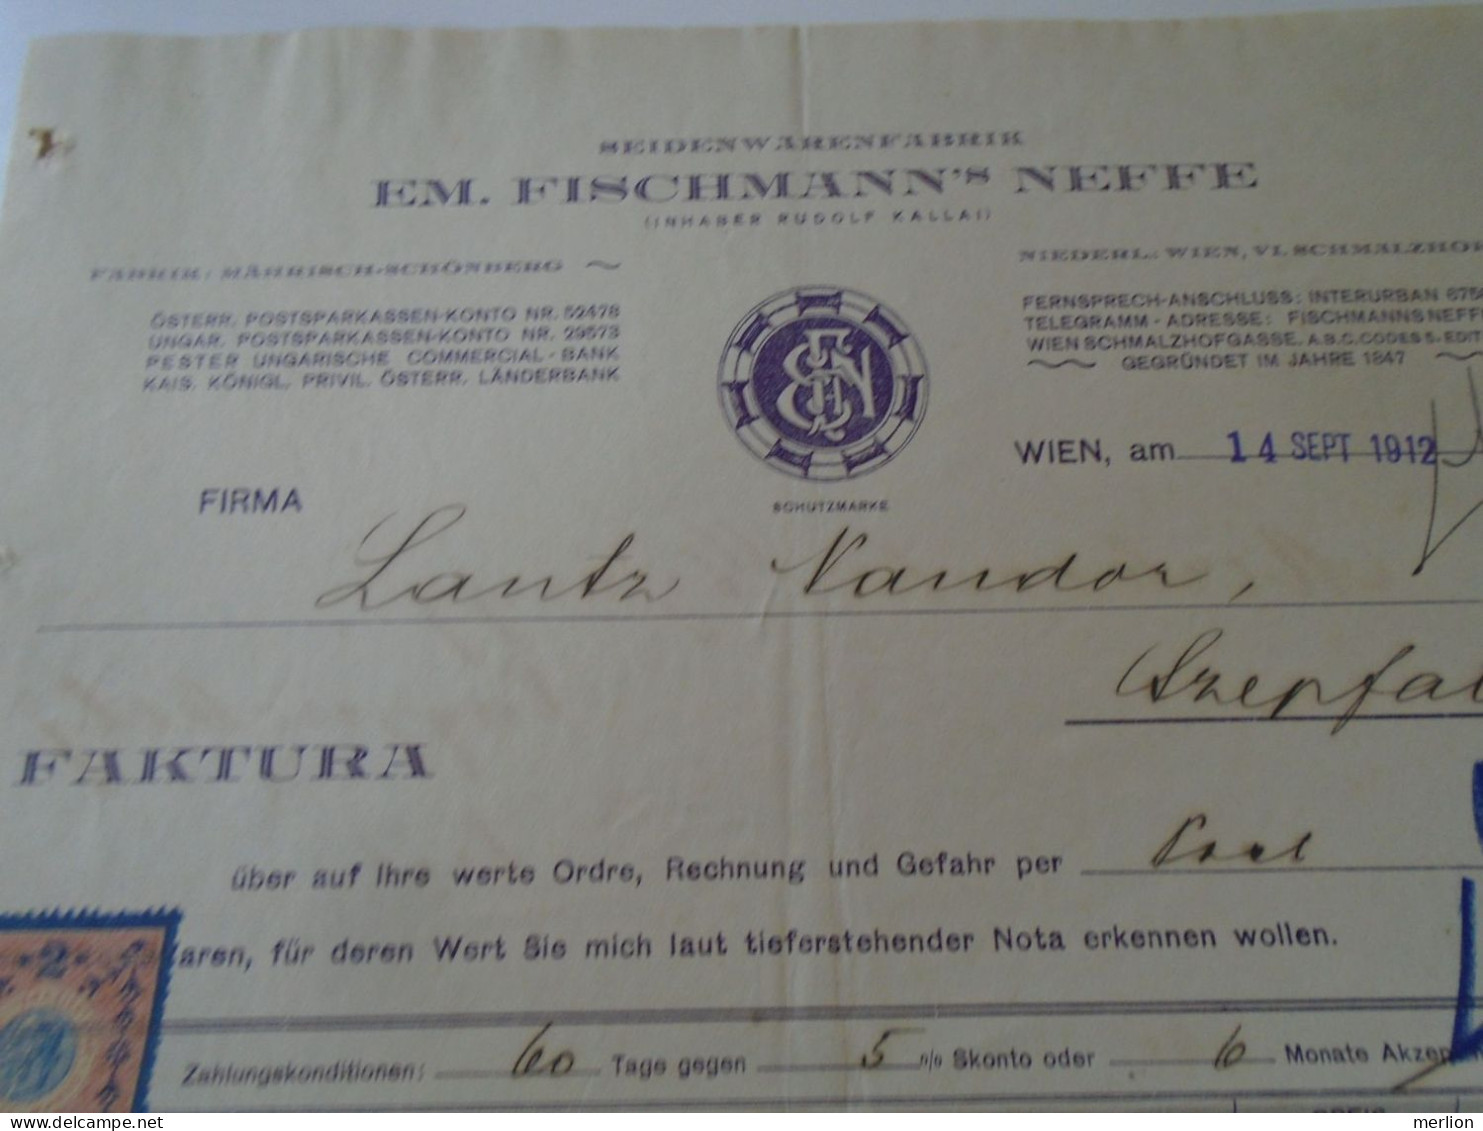 ZA470.28 Old Invoice  Austria -Em. Fischmann's Neffe  WIEN 1912 Sent To Nandor LANTZ Temesszépfalu Banat Hungary Romania - Österreich